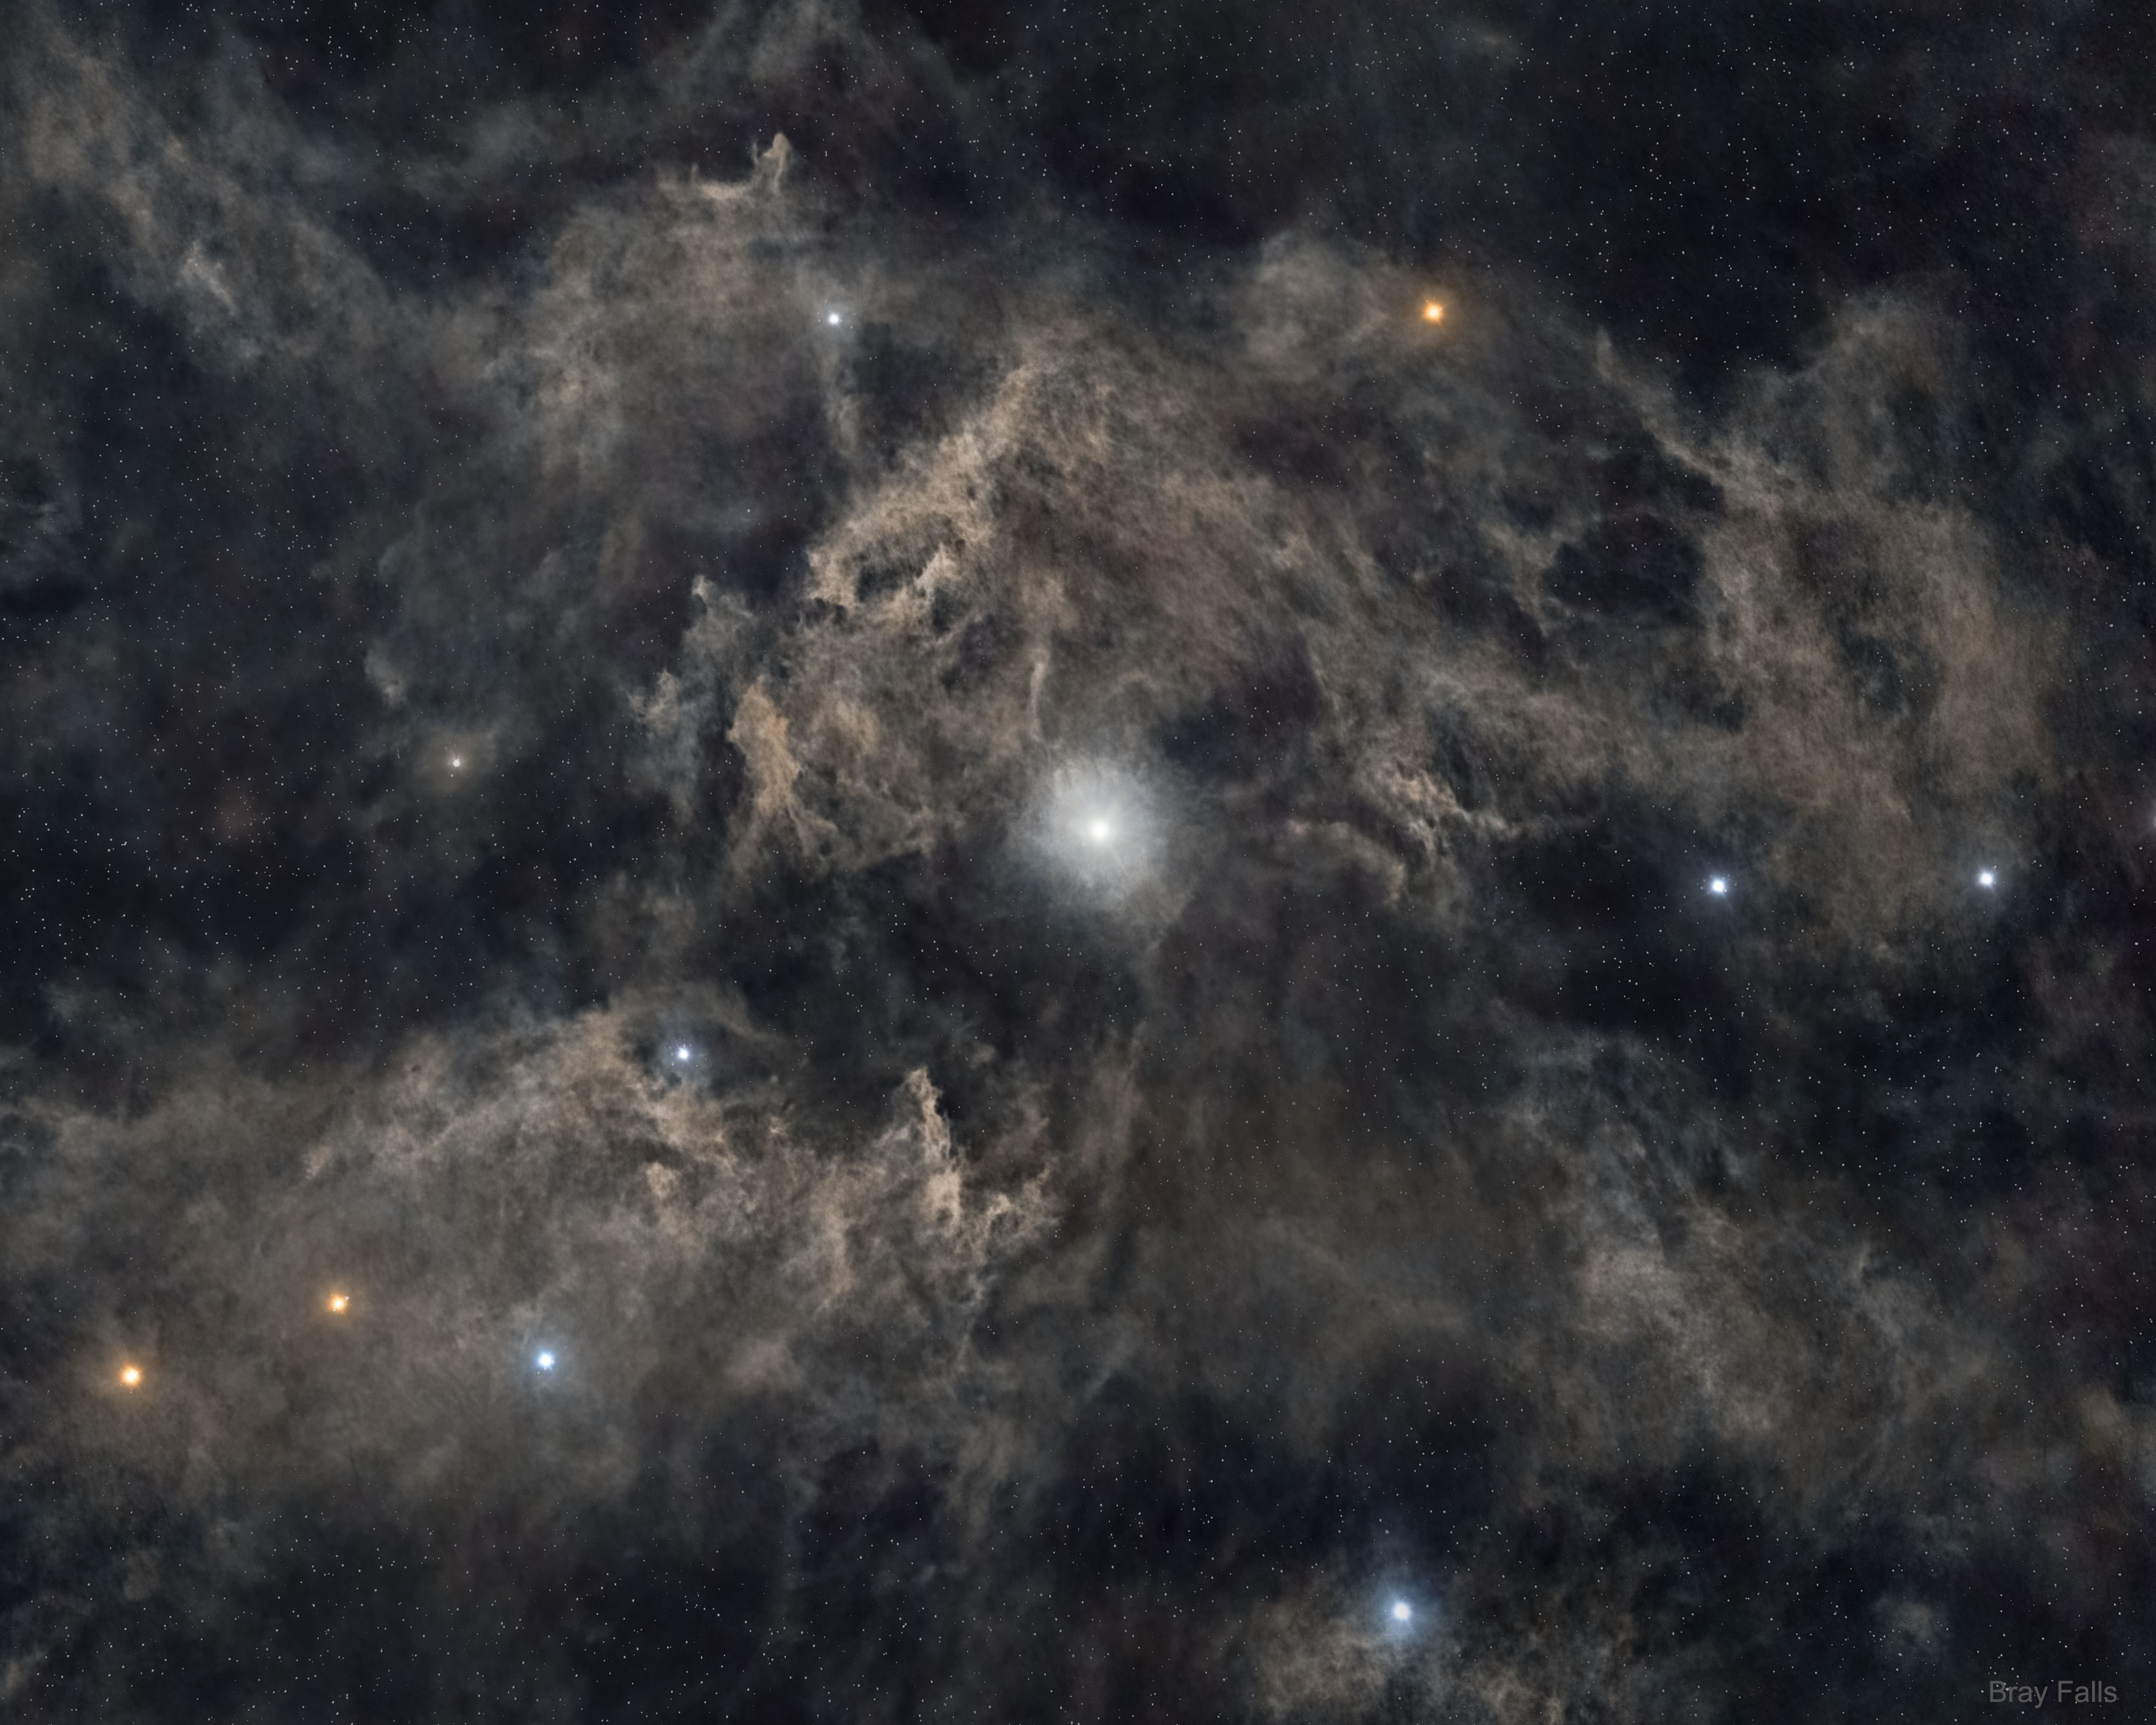 North Star,Polaris and Surrounding Dust